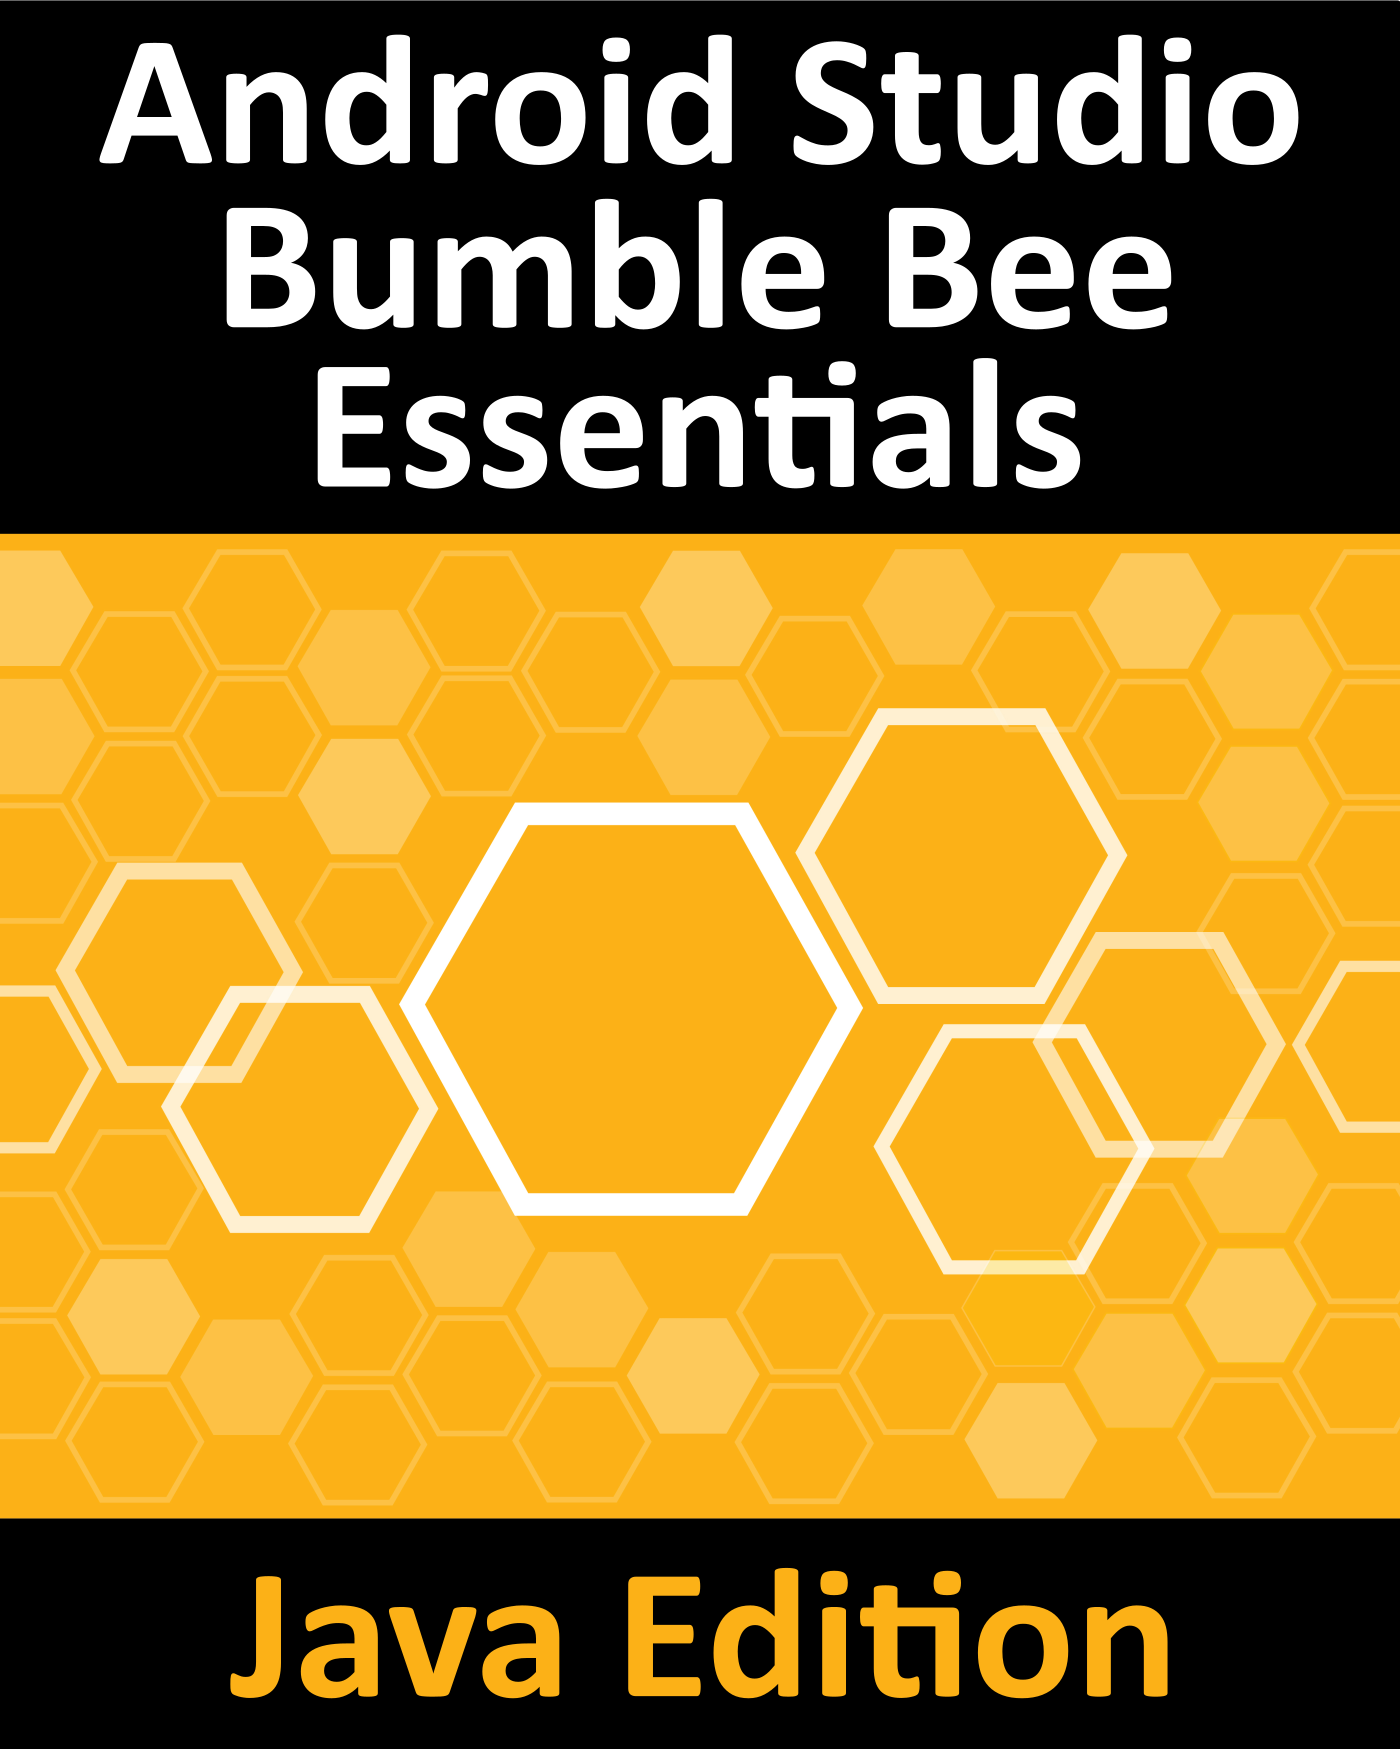 Android Studio Bumble Bee Essentials Java Edition Android Studio Bumble Bee - photo 1